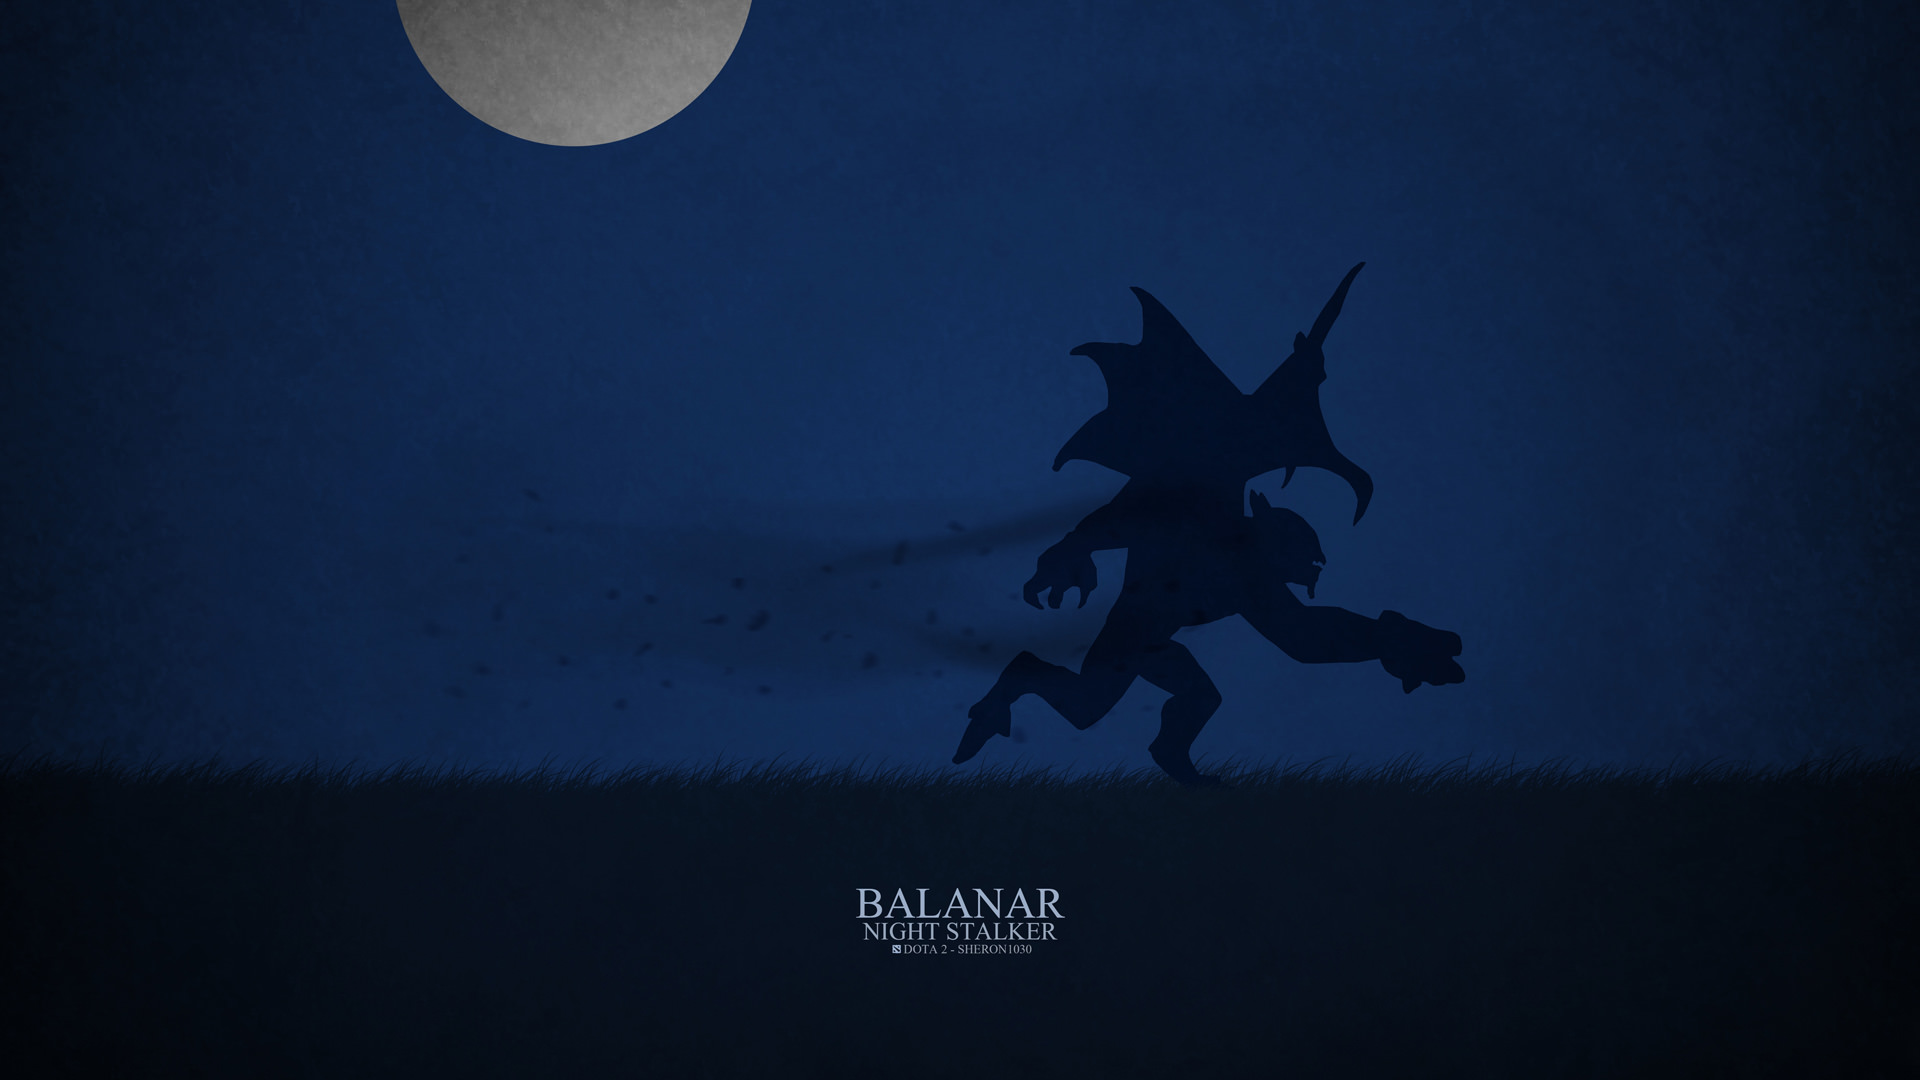 Night Stalker Balanar download dota 2 heroes minimalist silhouette HD